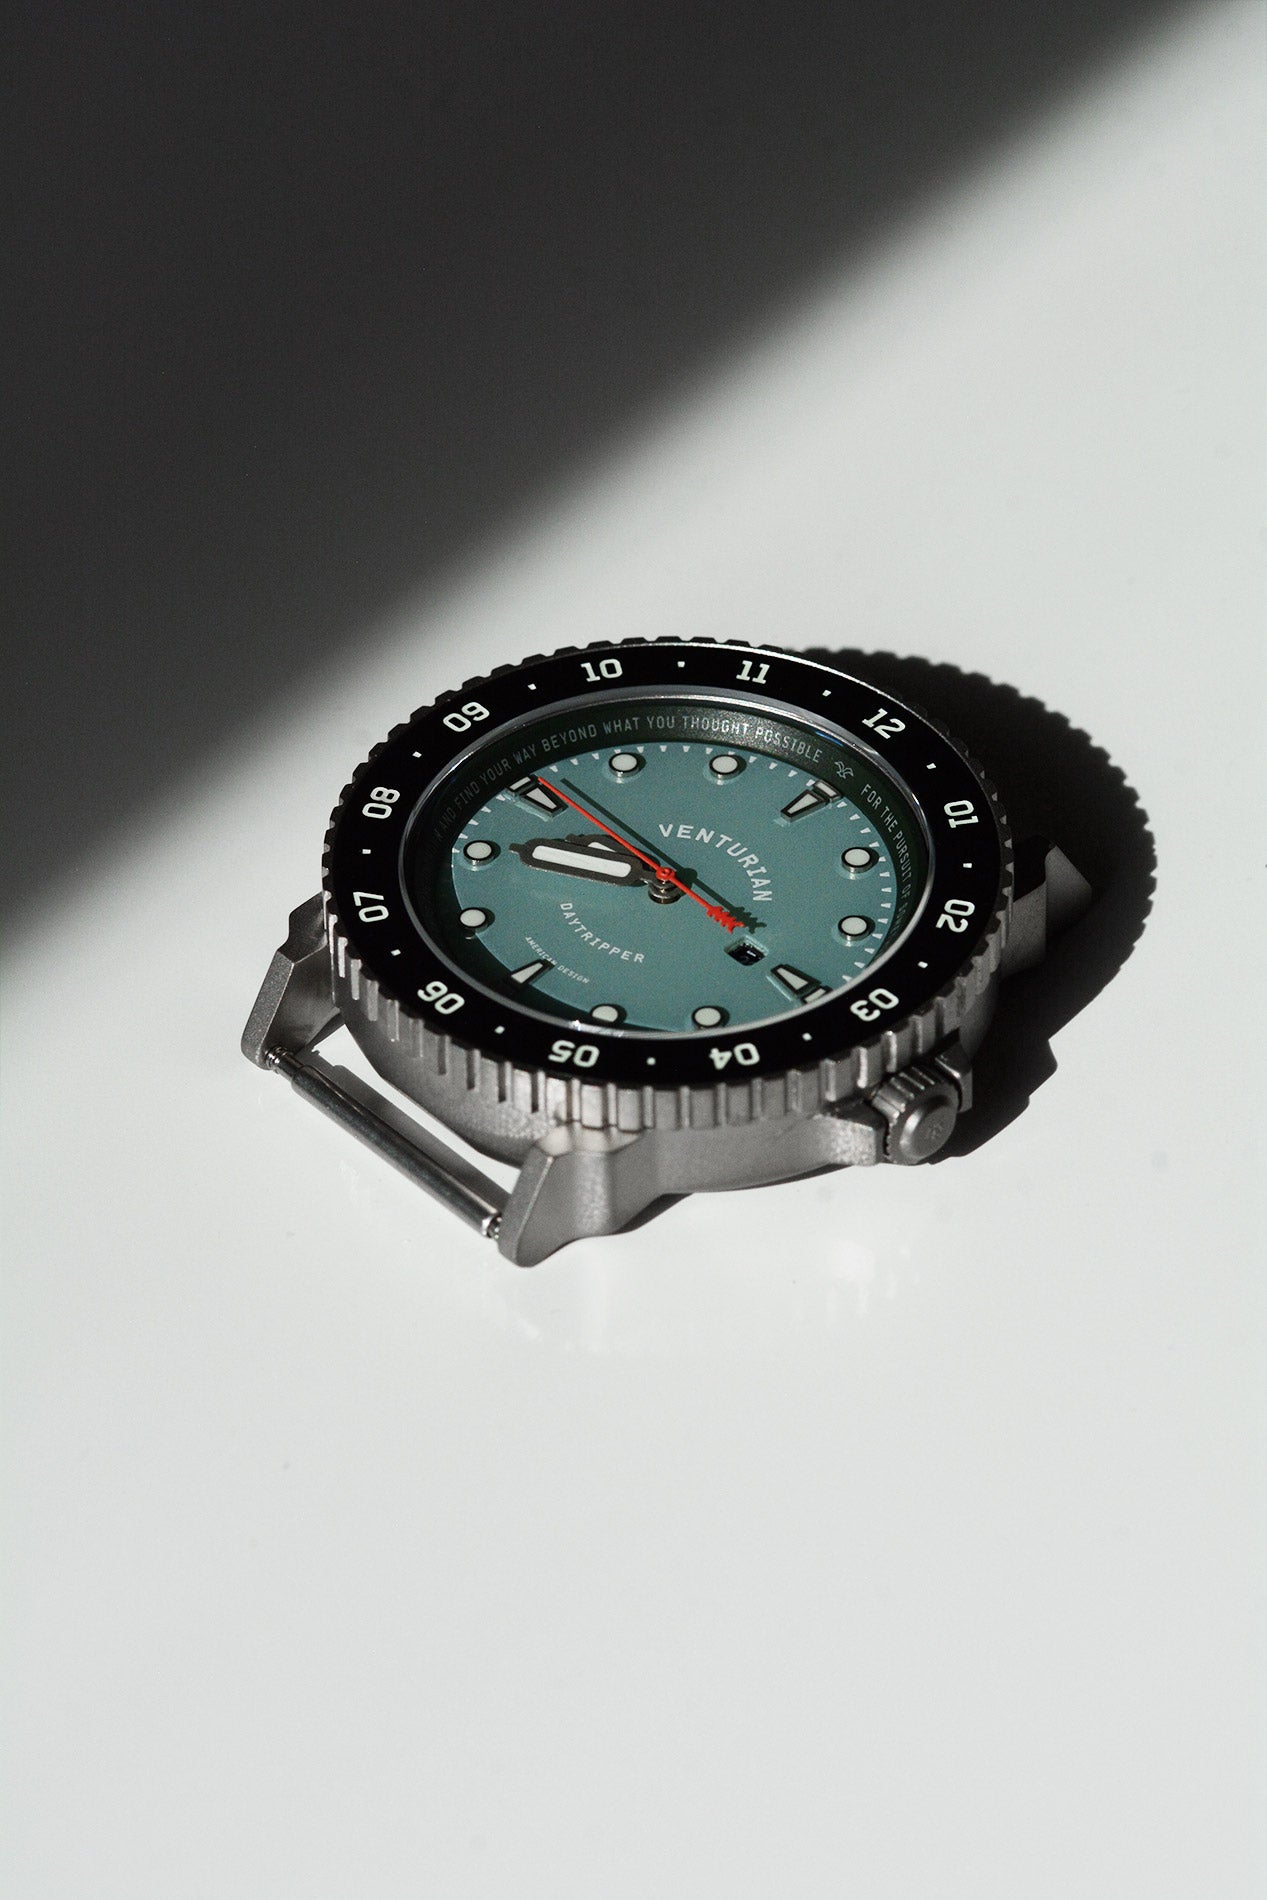 Venturian WatchWorks Daytripper mens watch — 38mm dual timer bezel — blue watch dial case.